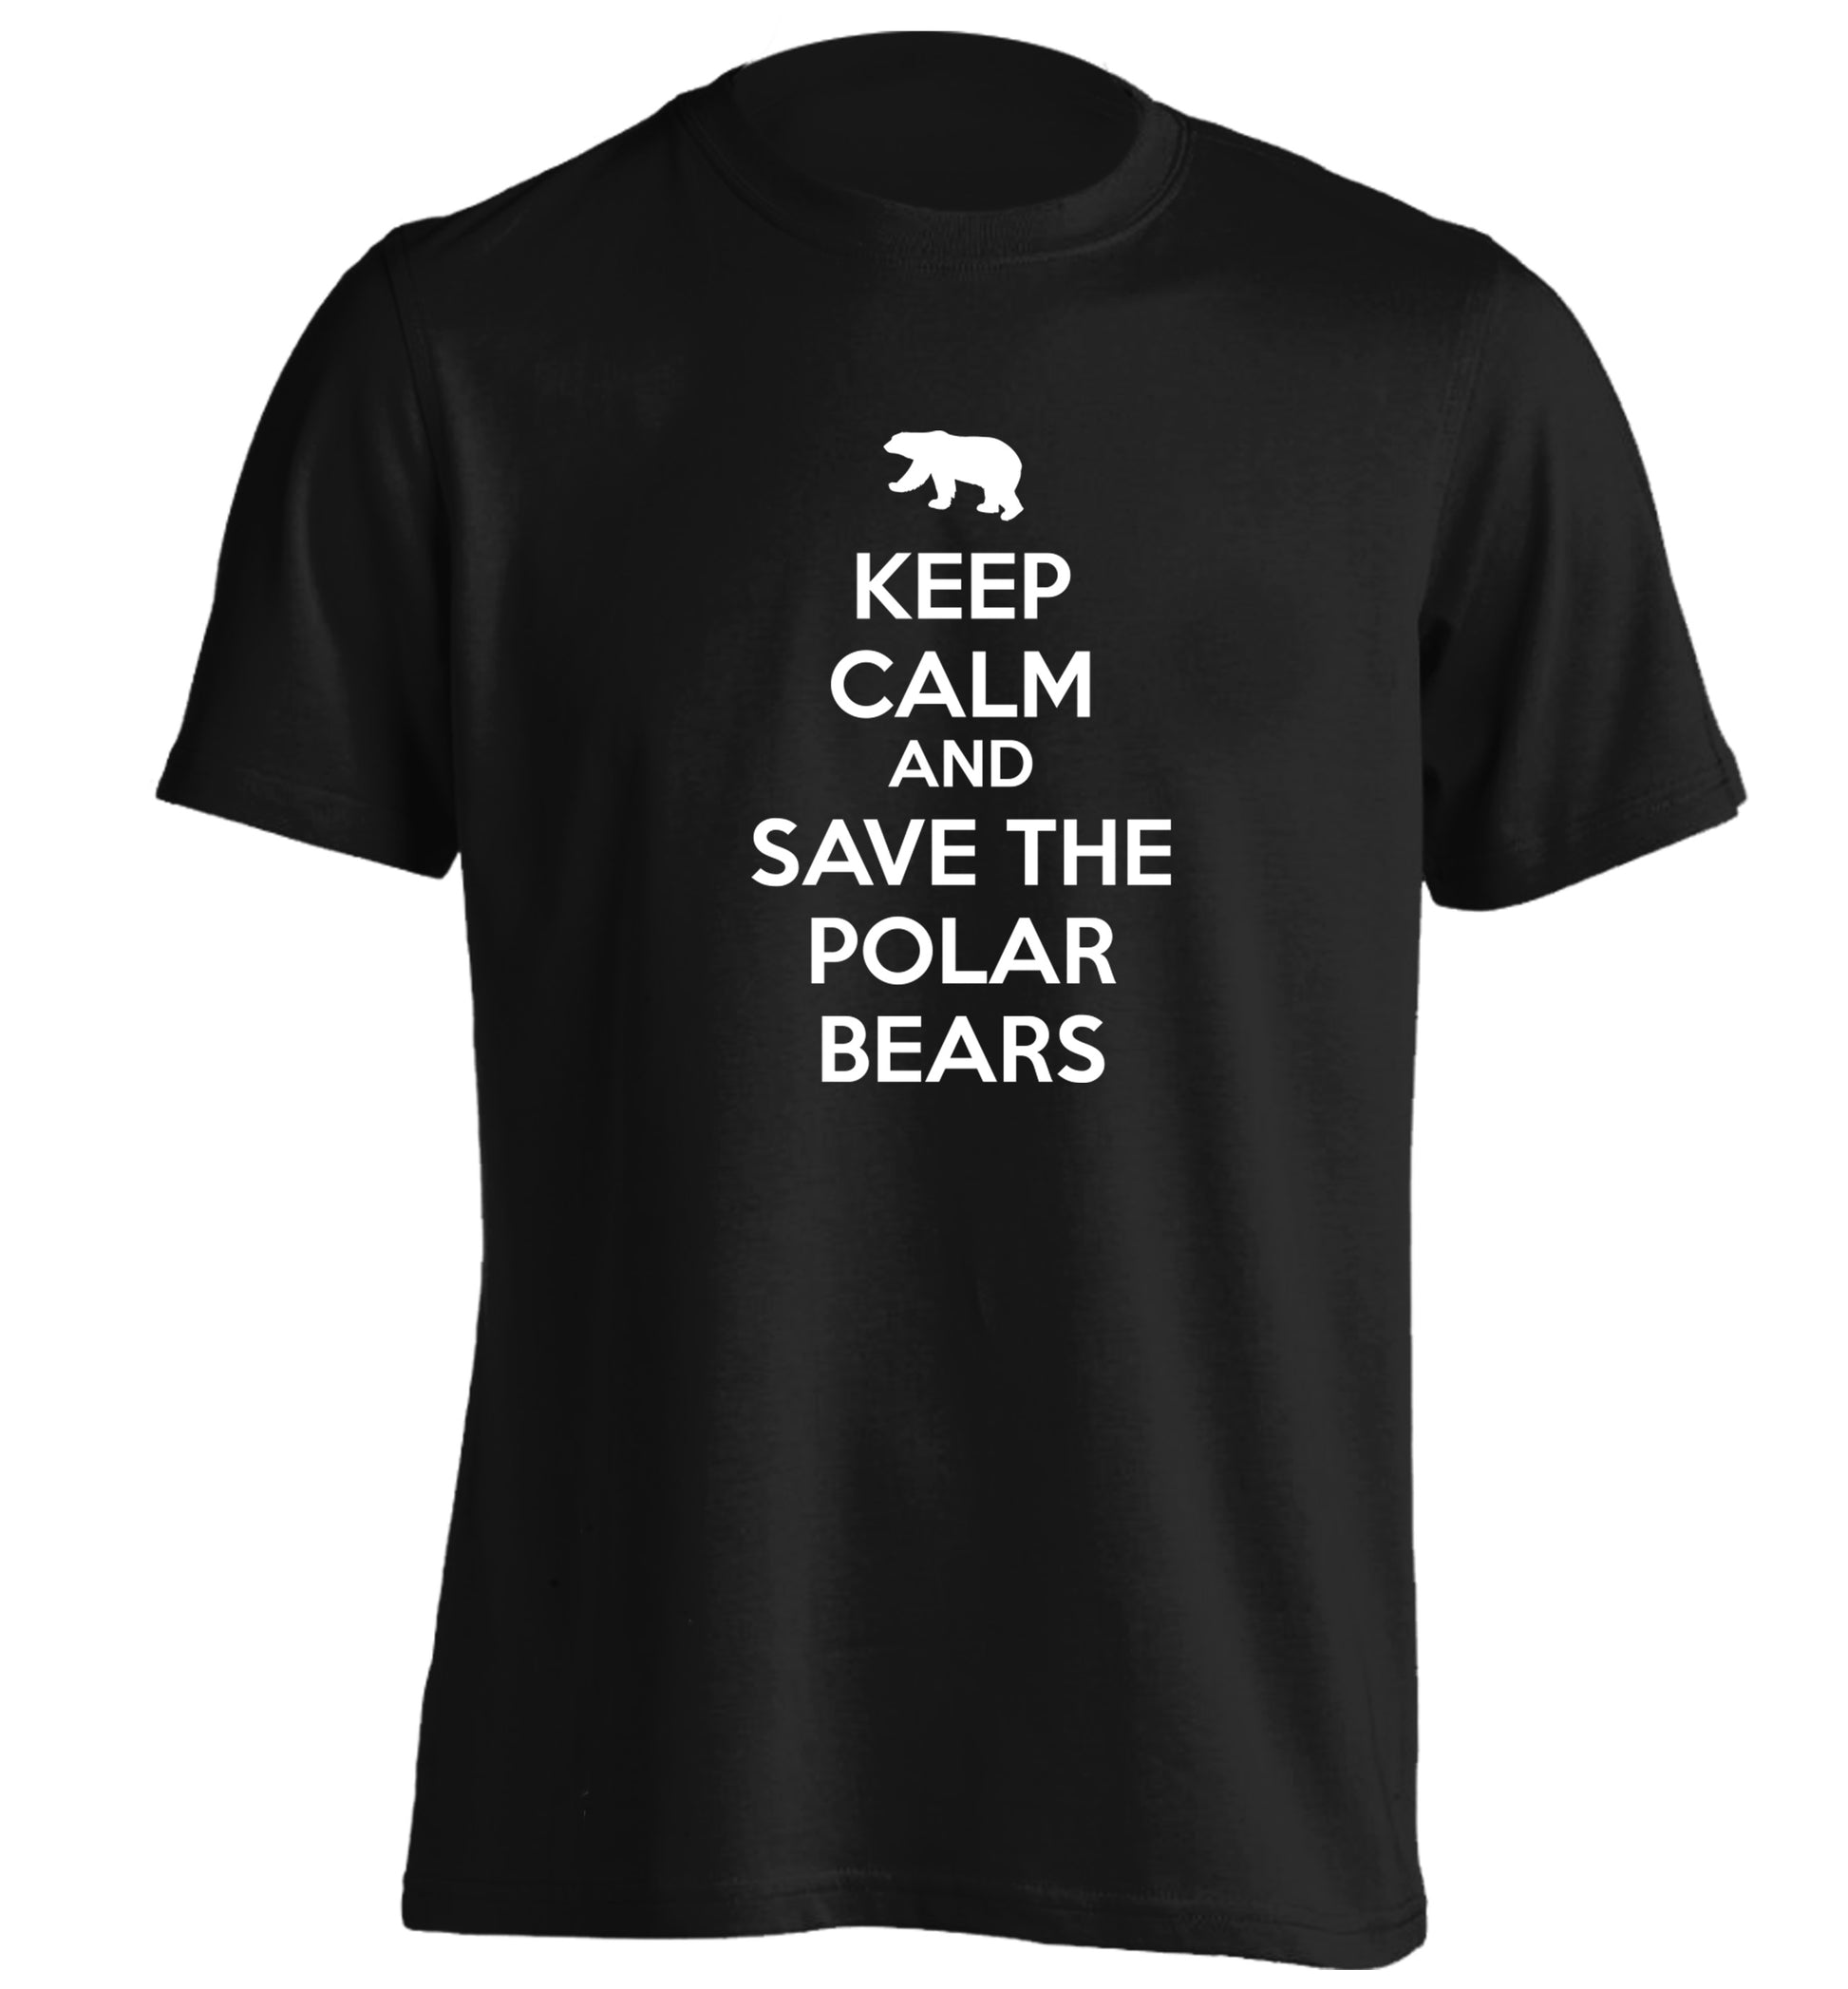 Keep calm and save the polar bears adults unisex black Tshirt 2XL